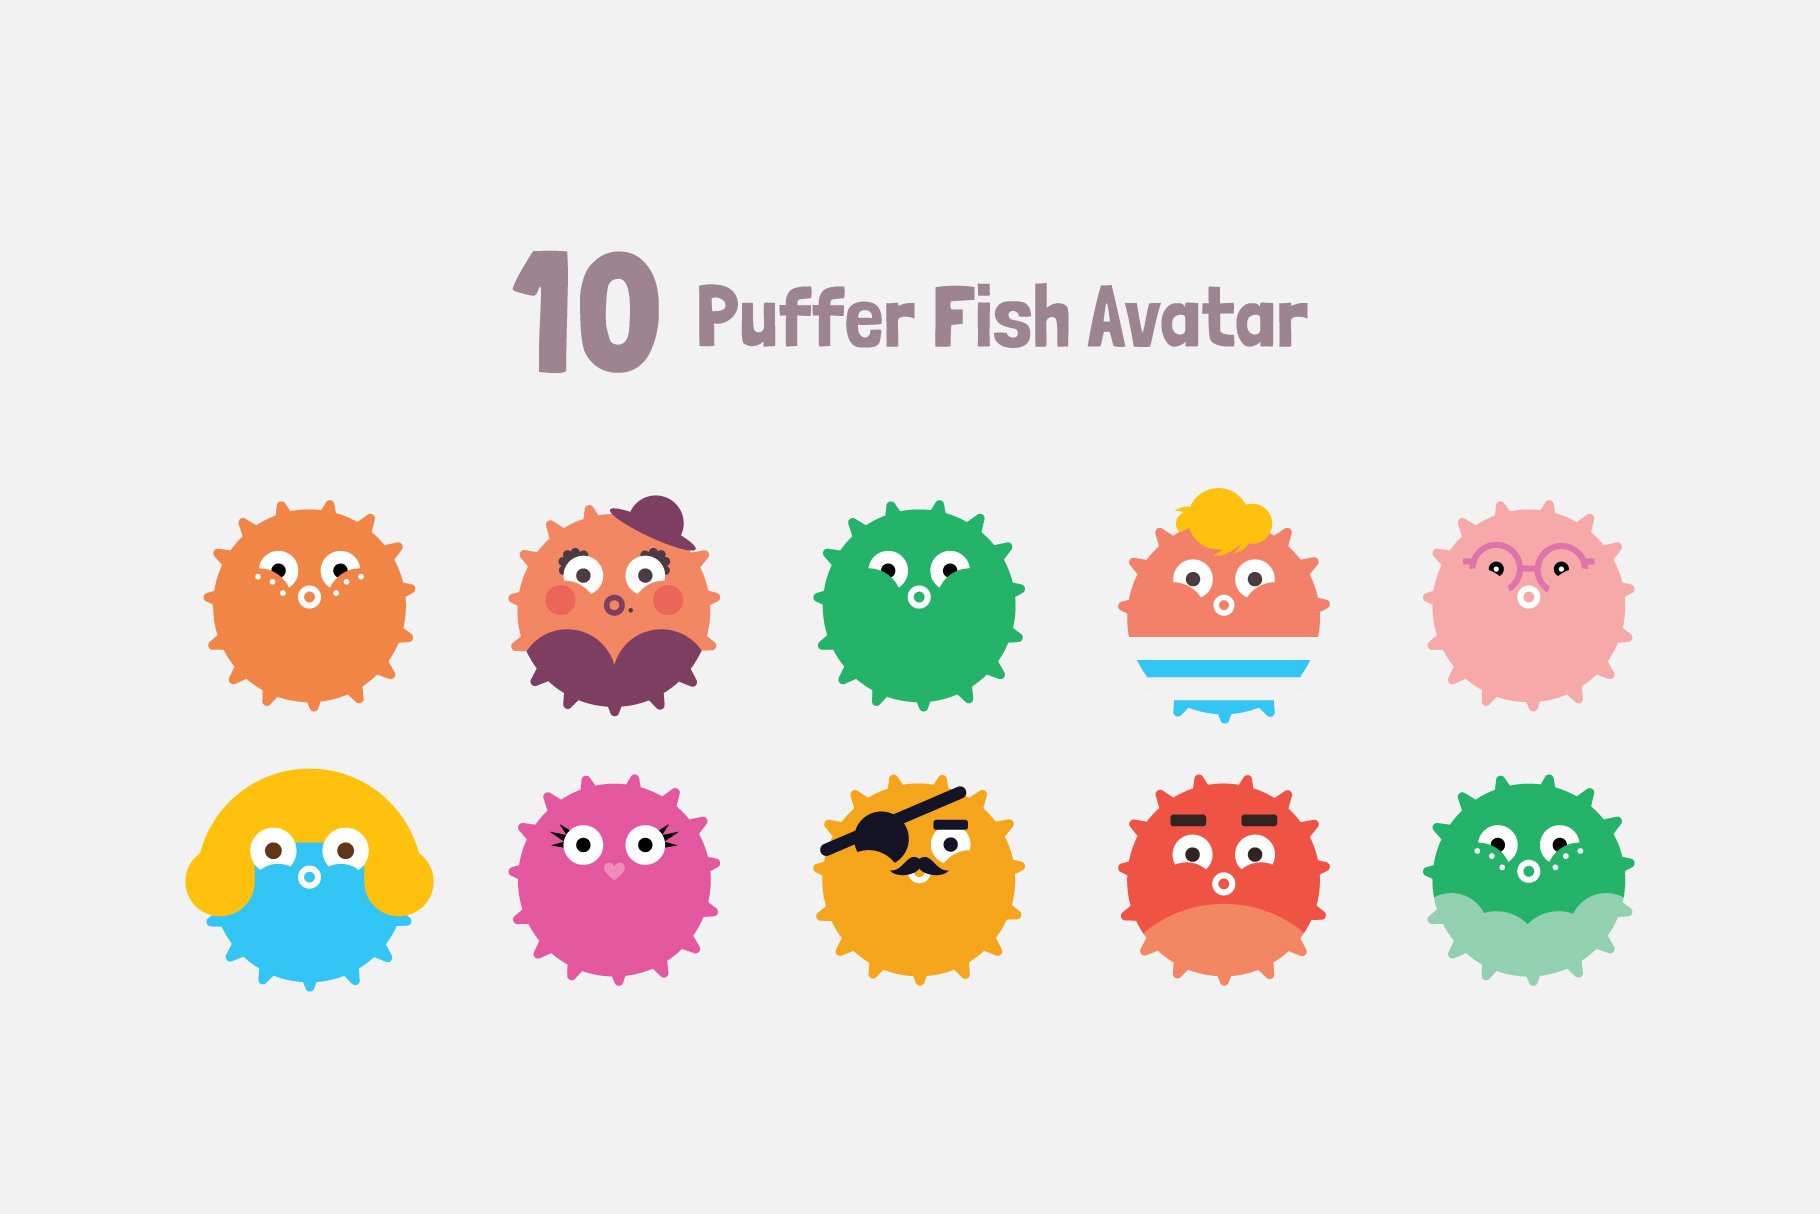 Puffer Fish Avatars cover image.